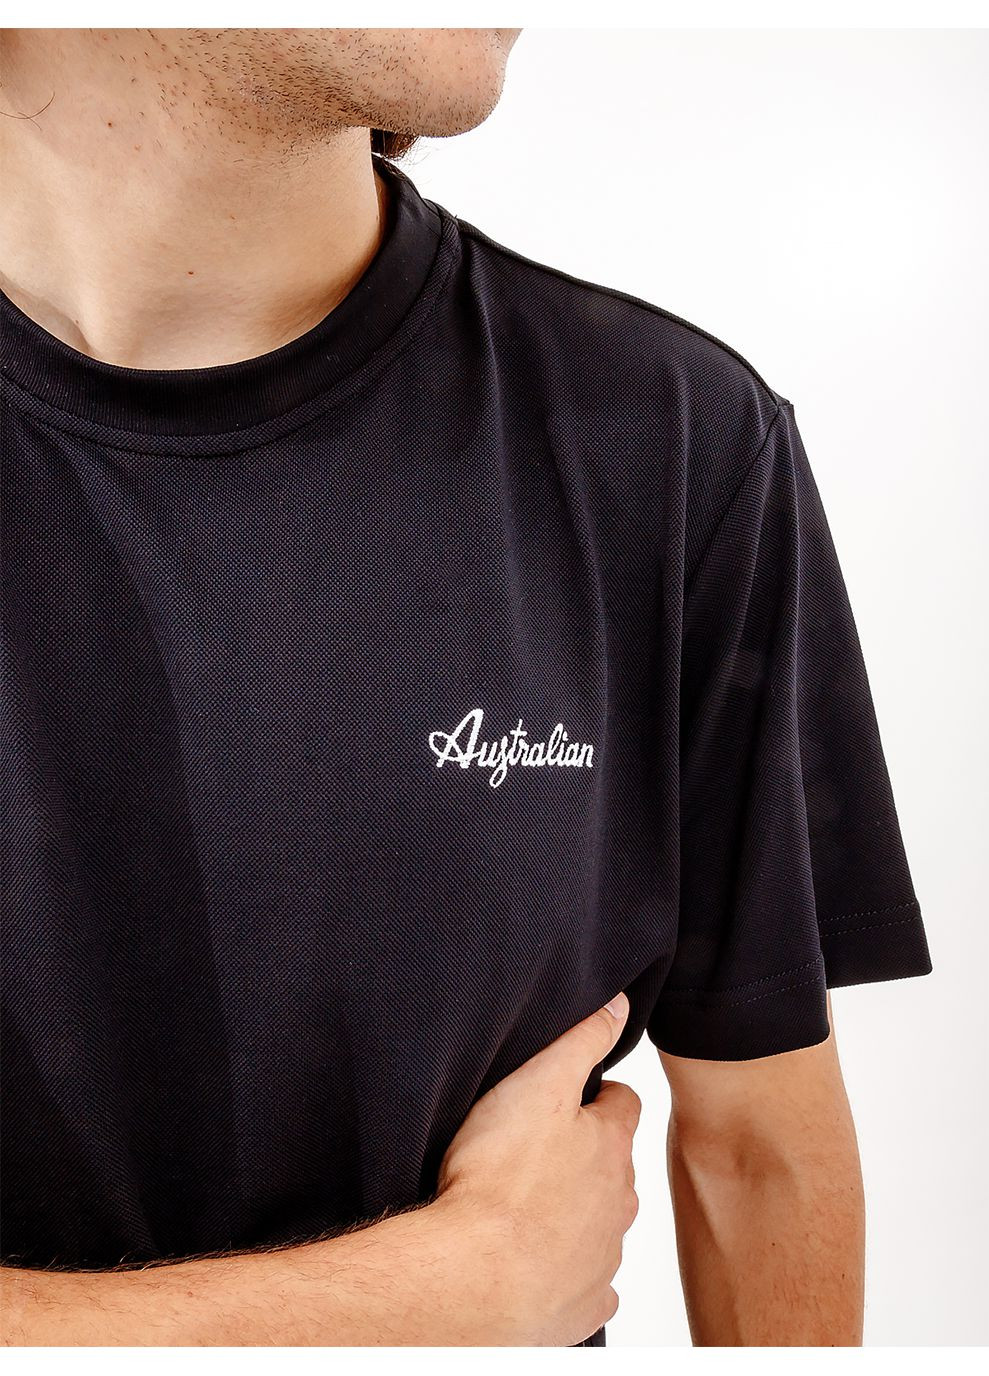 Черная мужская футболка easy tech pique' t-shirt r-fit черный Australian